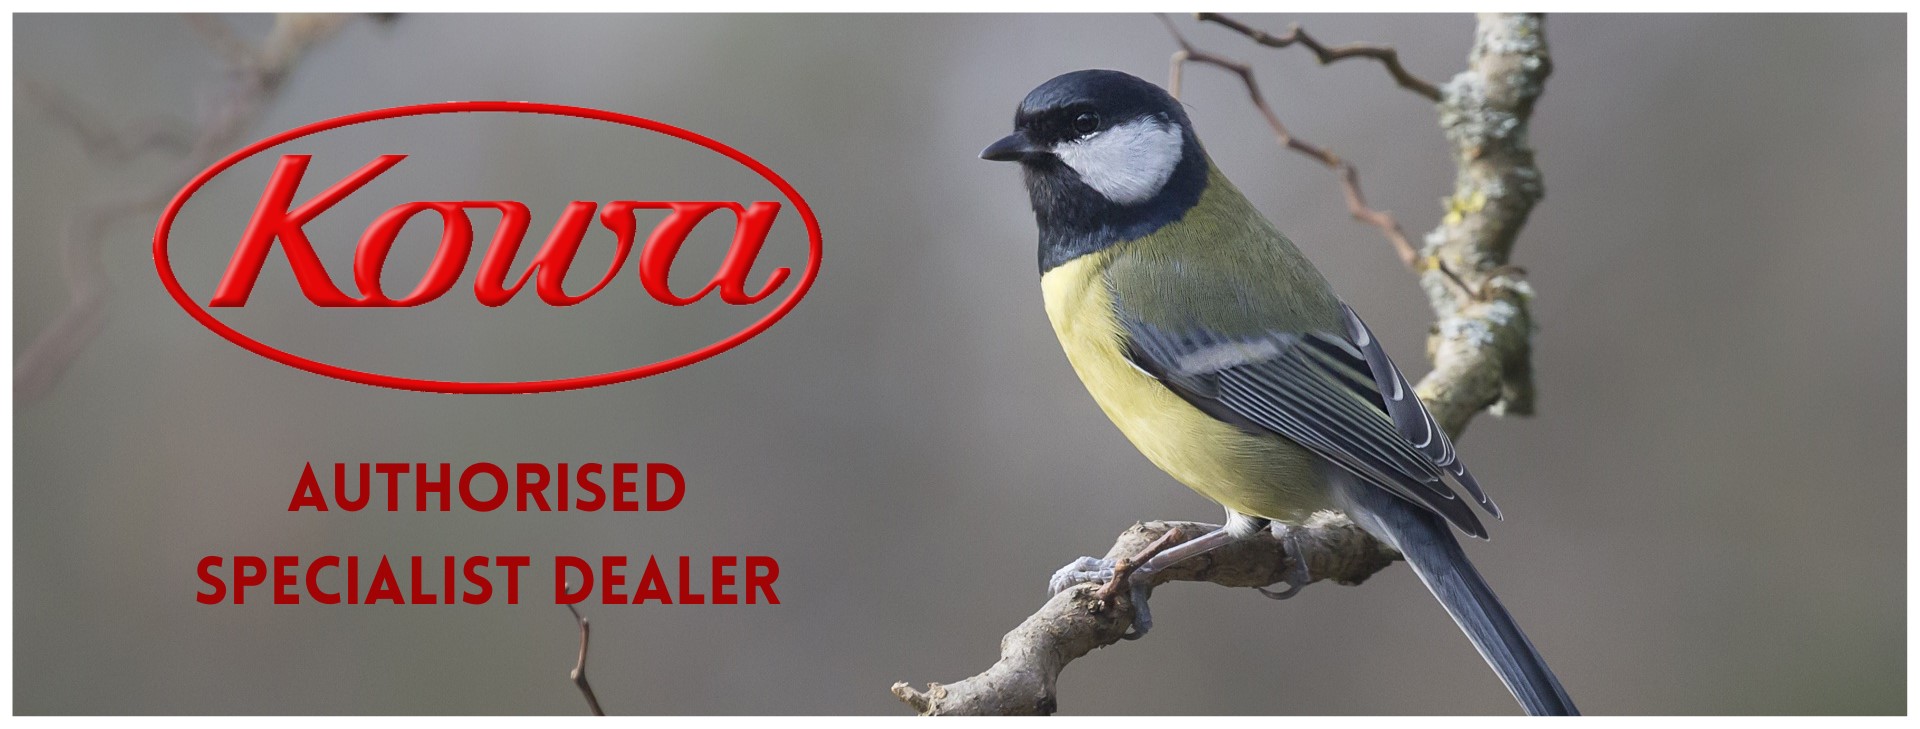 ace optics is an kowa authorised dealer. bird picture